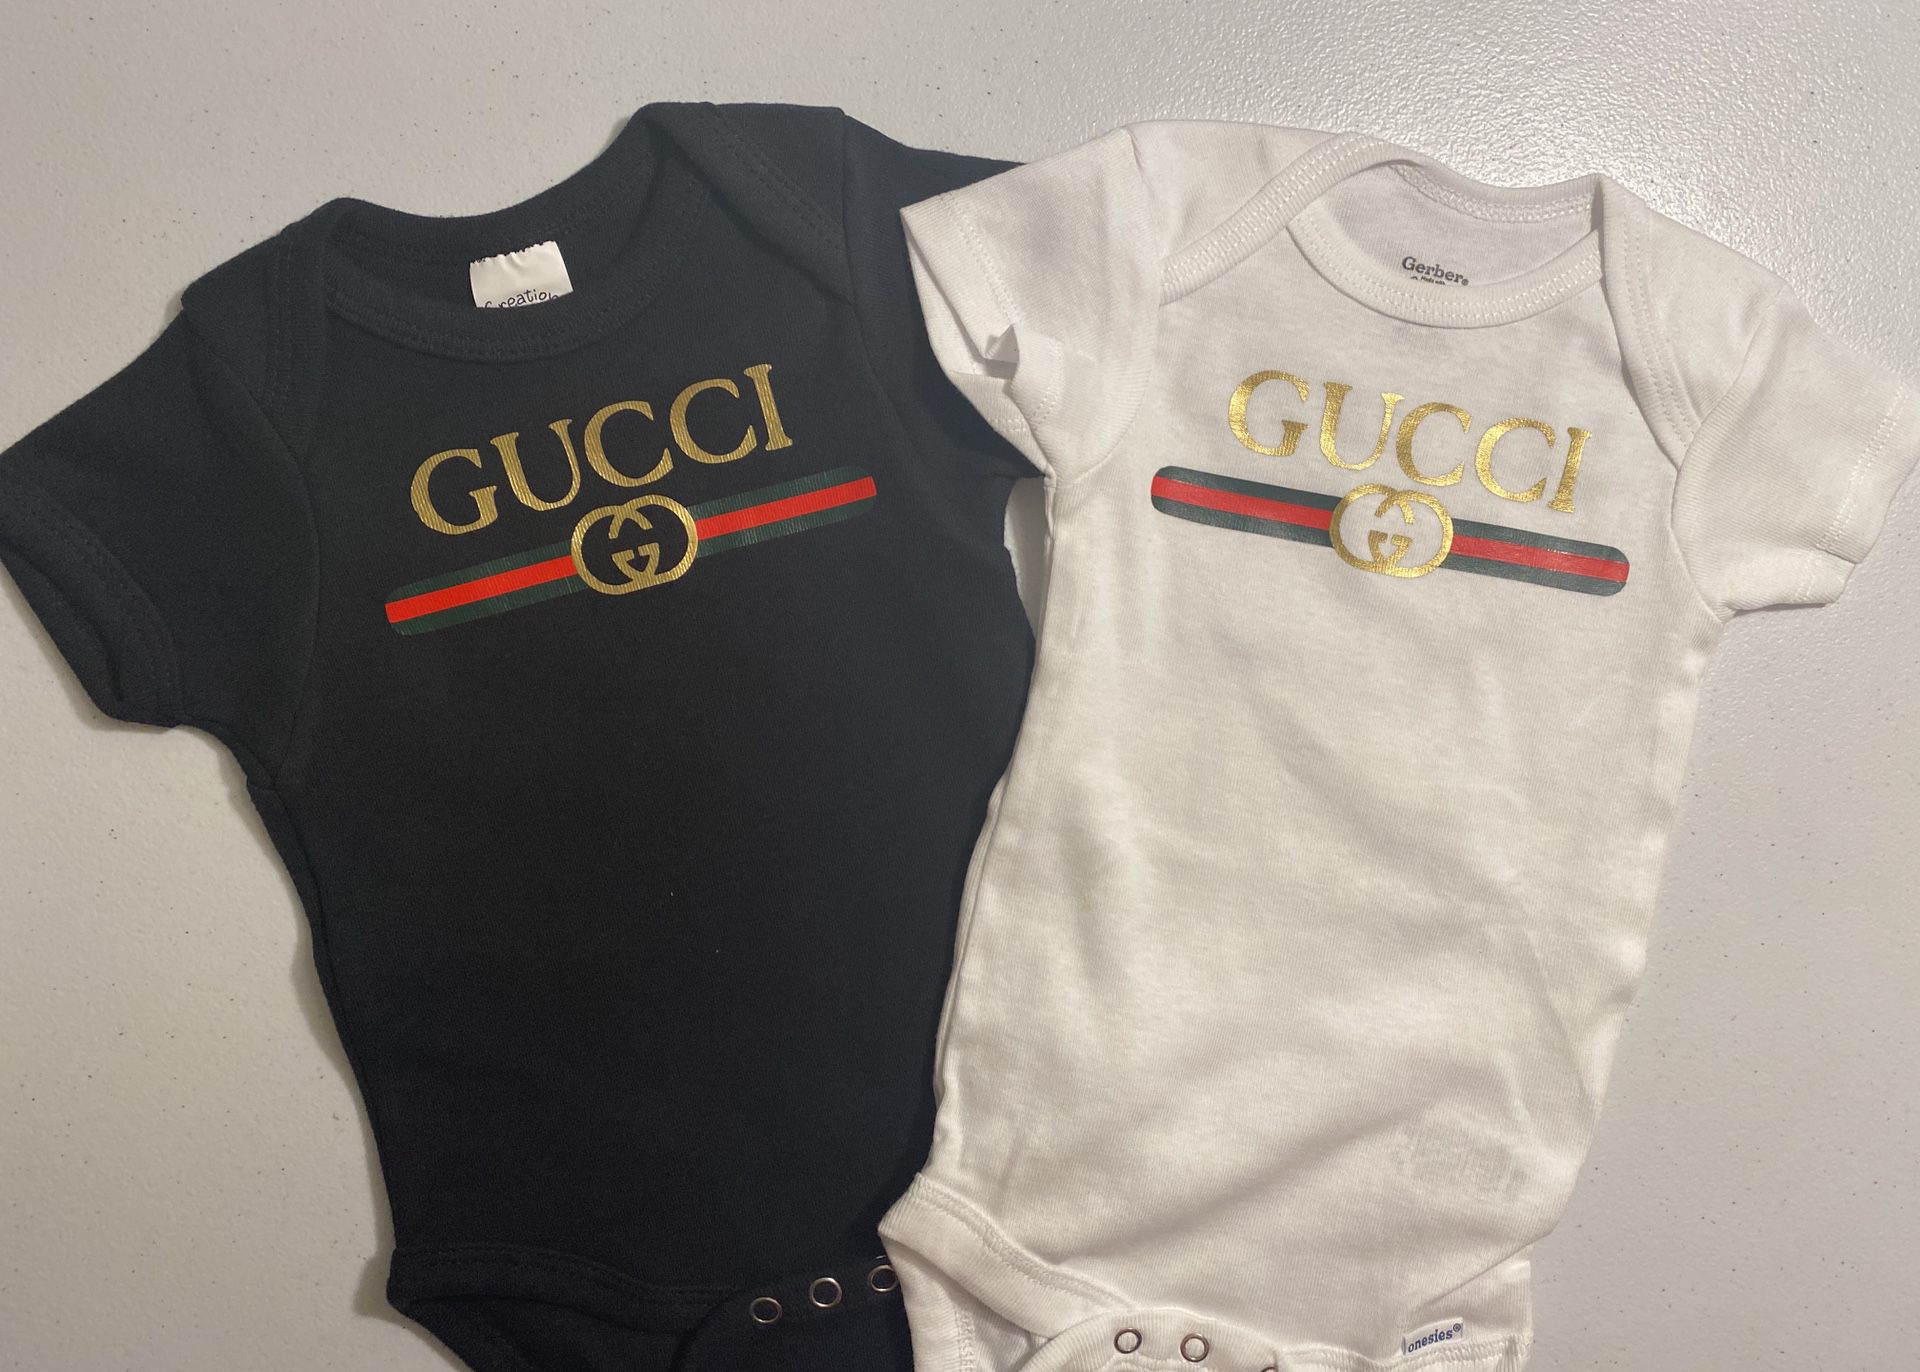 2 Gucci shirt